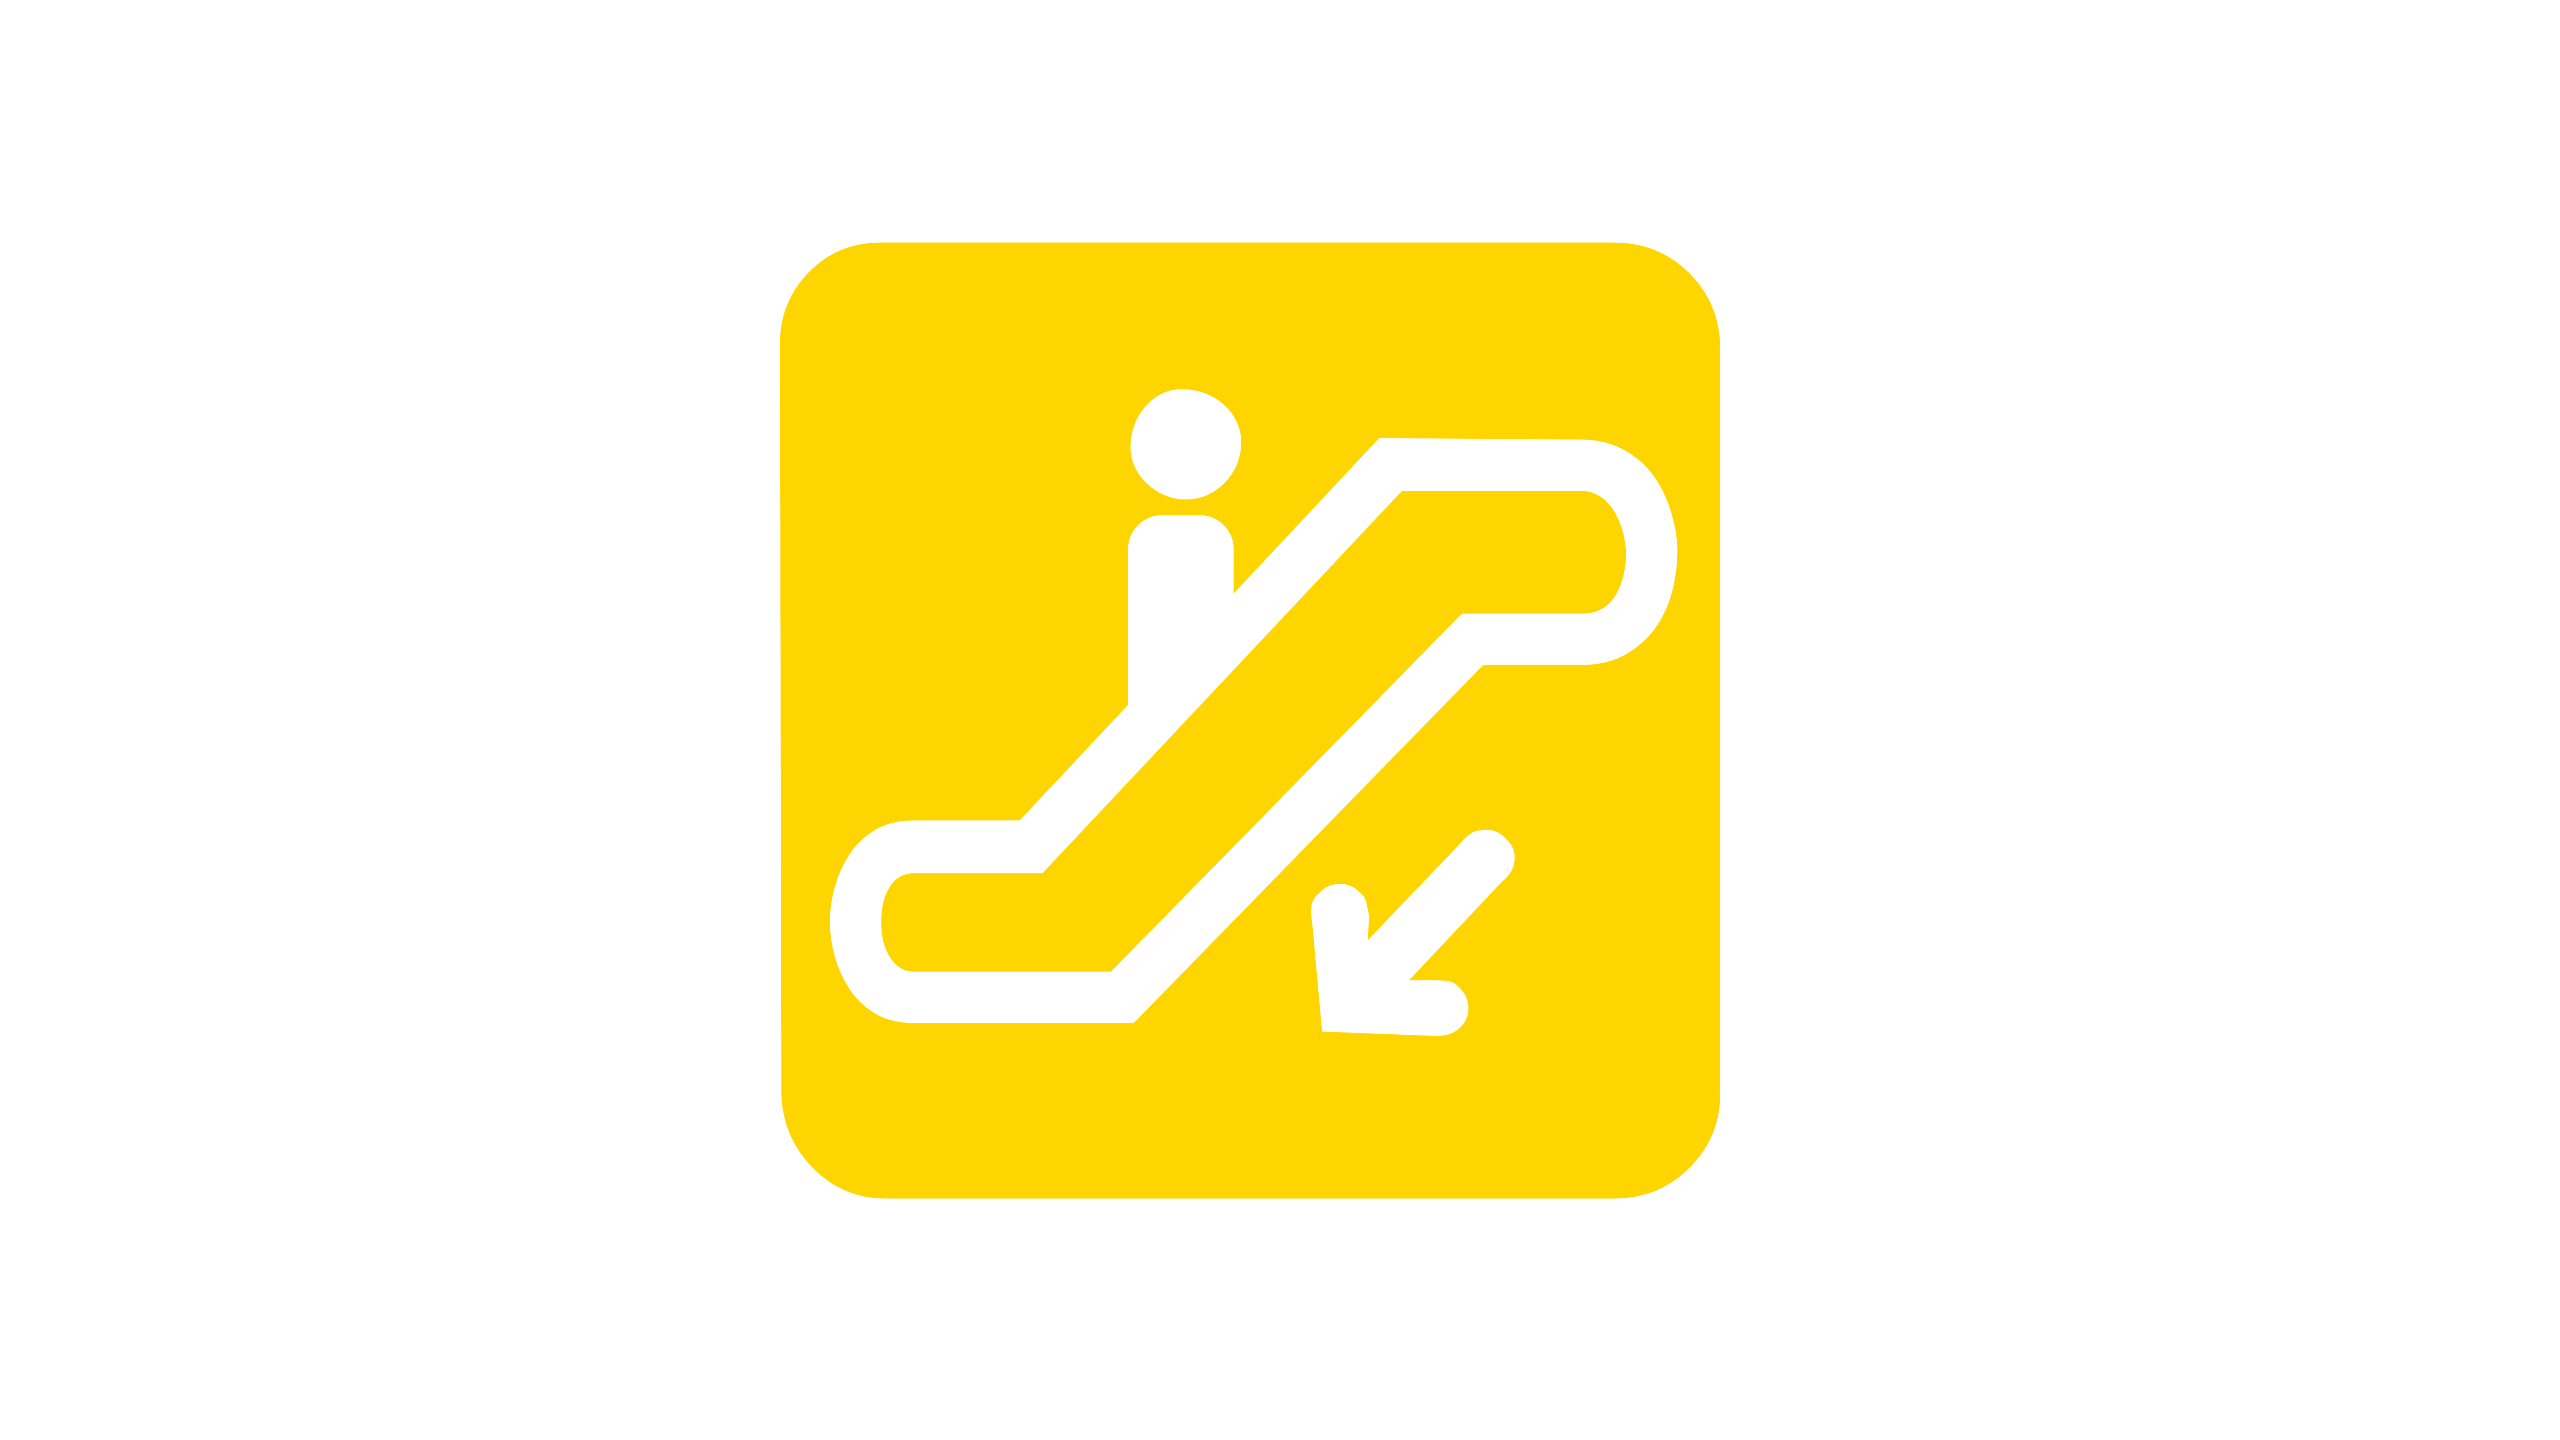 Escalator PNG Image